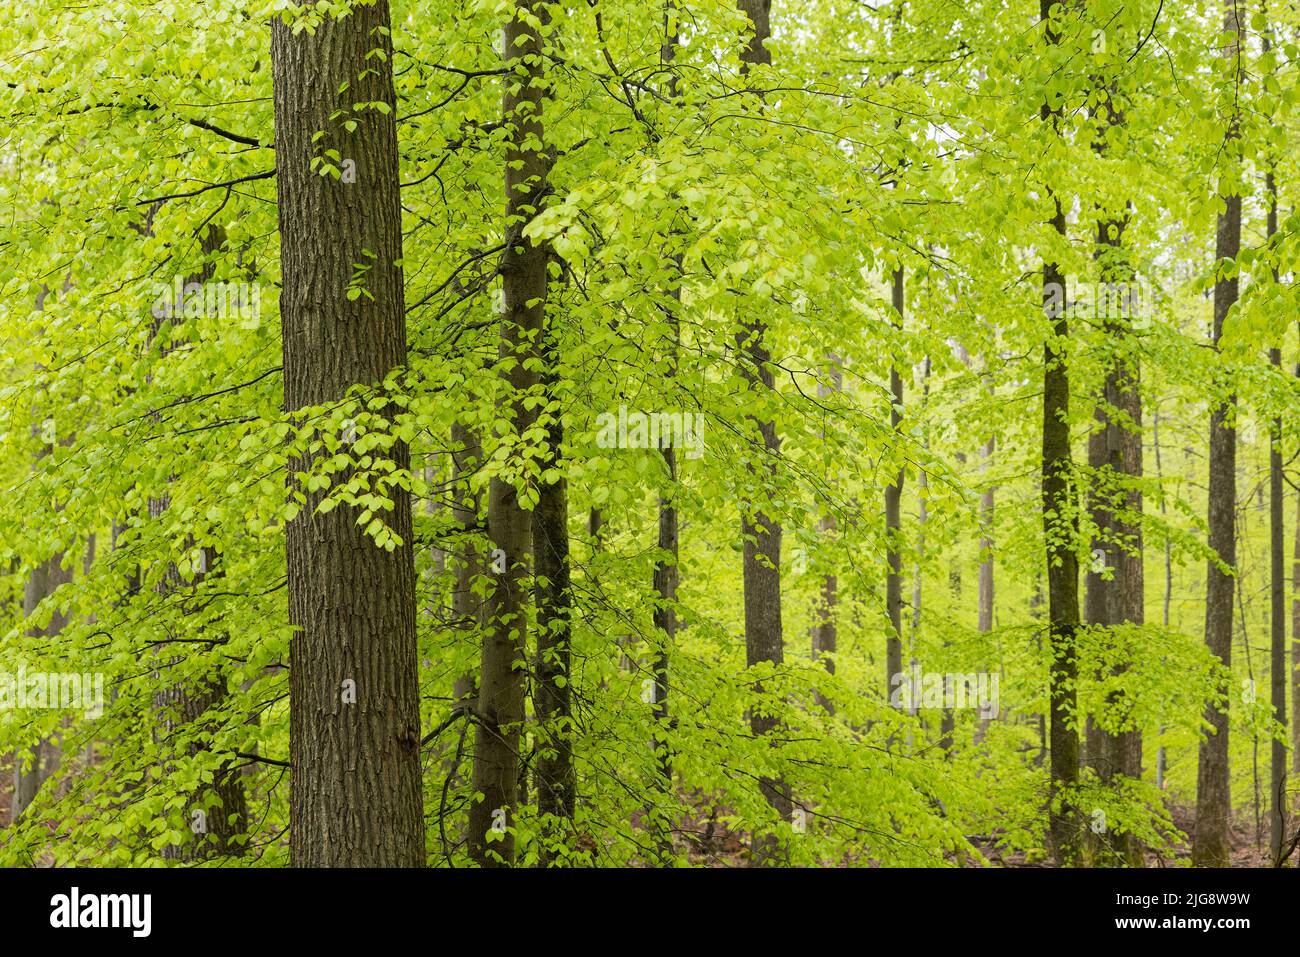 Beech forest in spring, fresh light green foliage, Pfälzerwald Nature Park, Pfälzerwald-Nordvogesen Biosphere Reserve, Germany, Rhineland-Palatinate Stock Photo